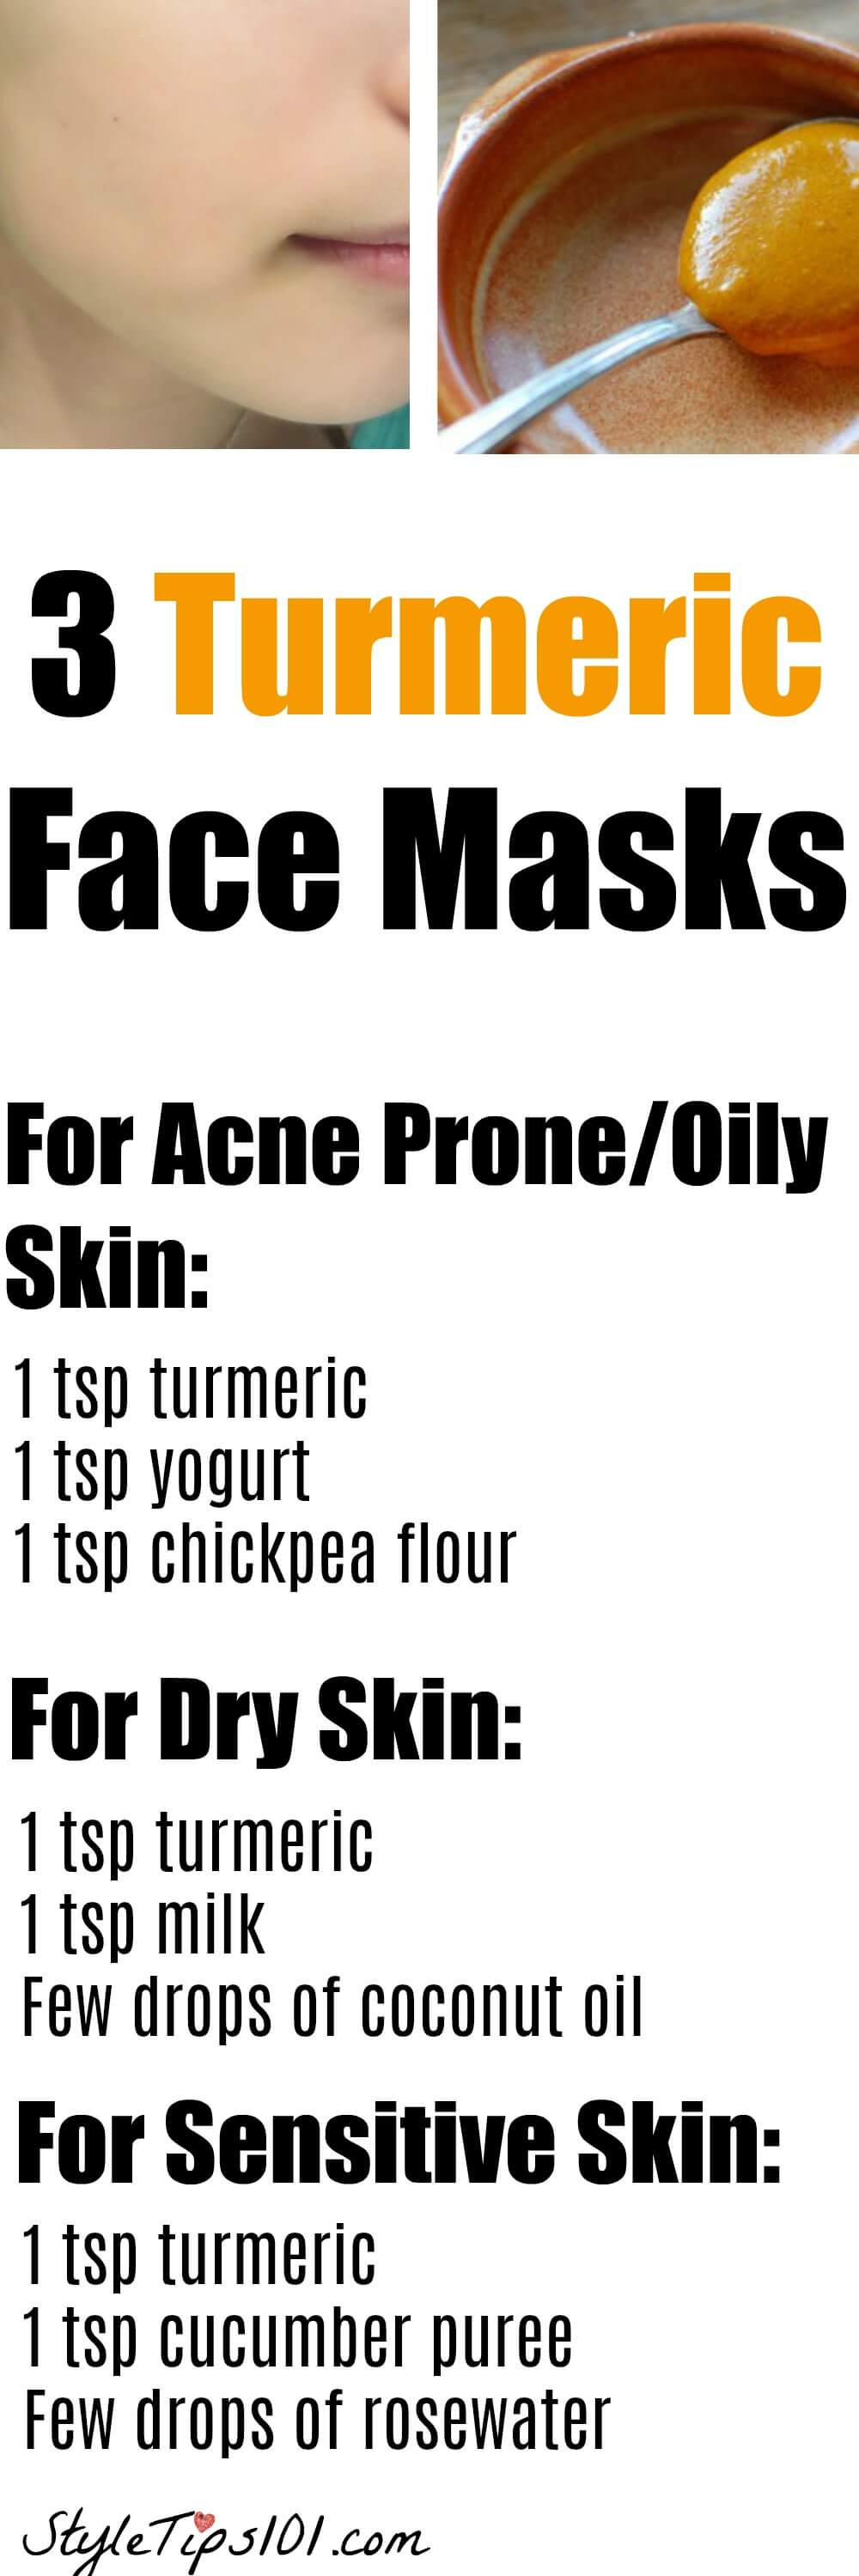 Turmeric Face Masks